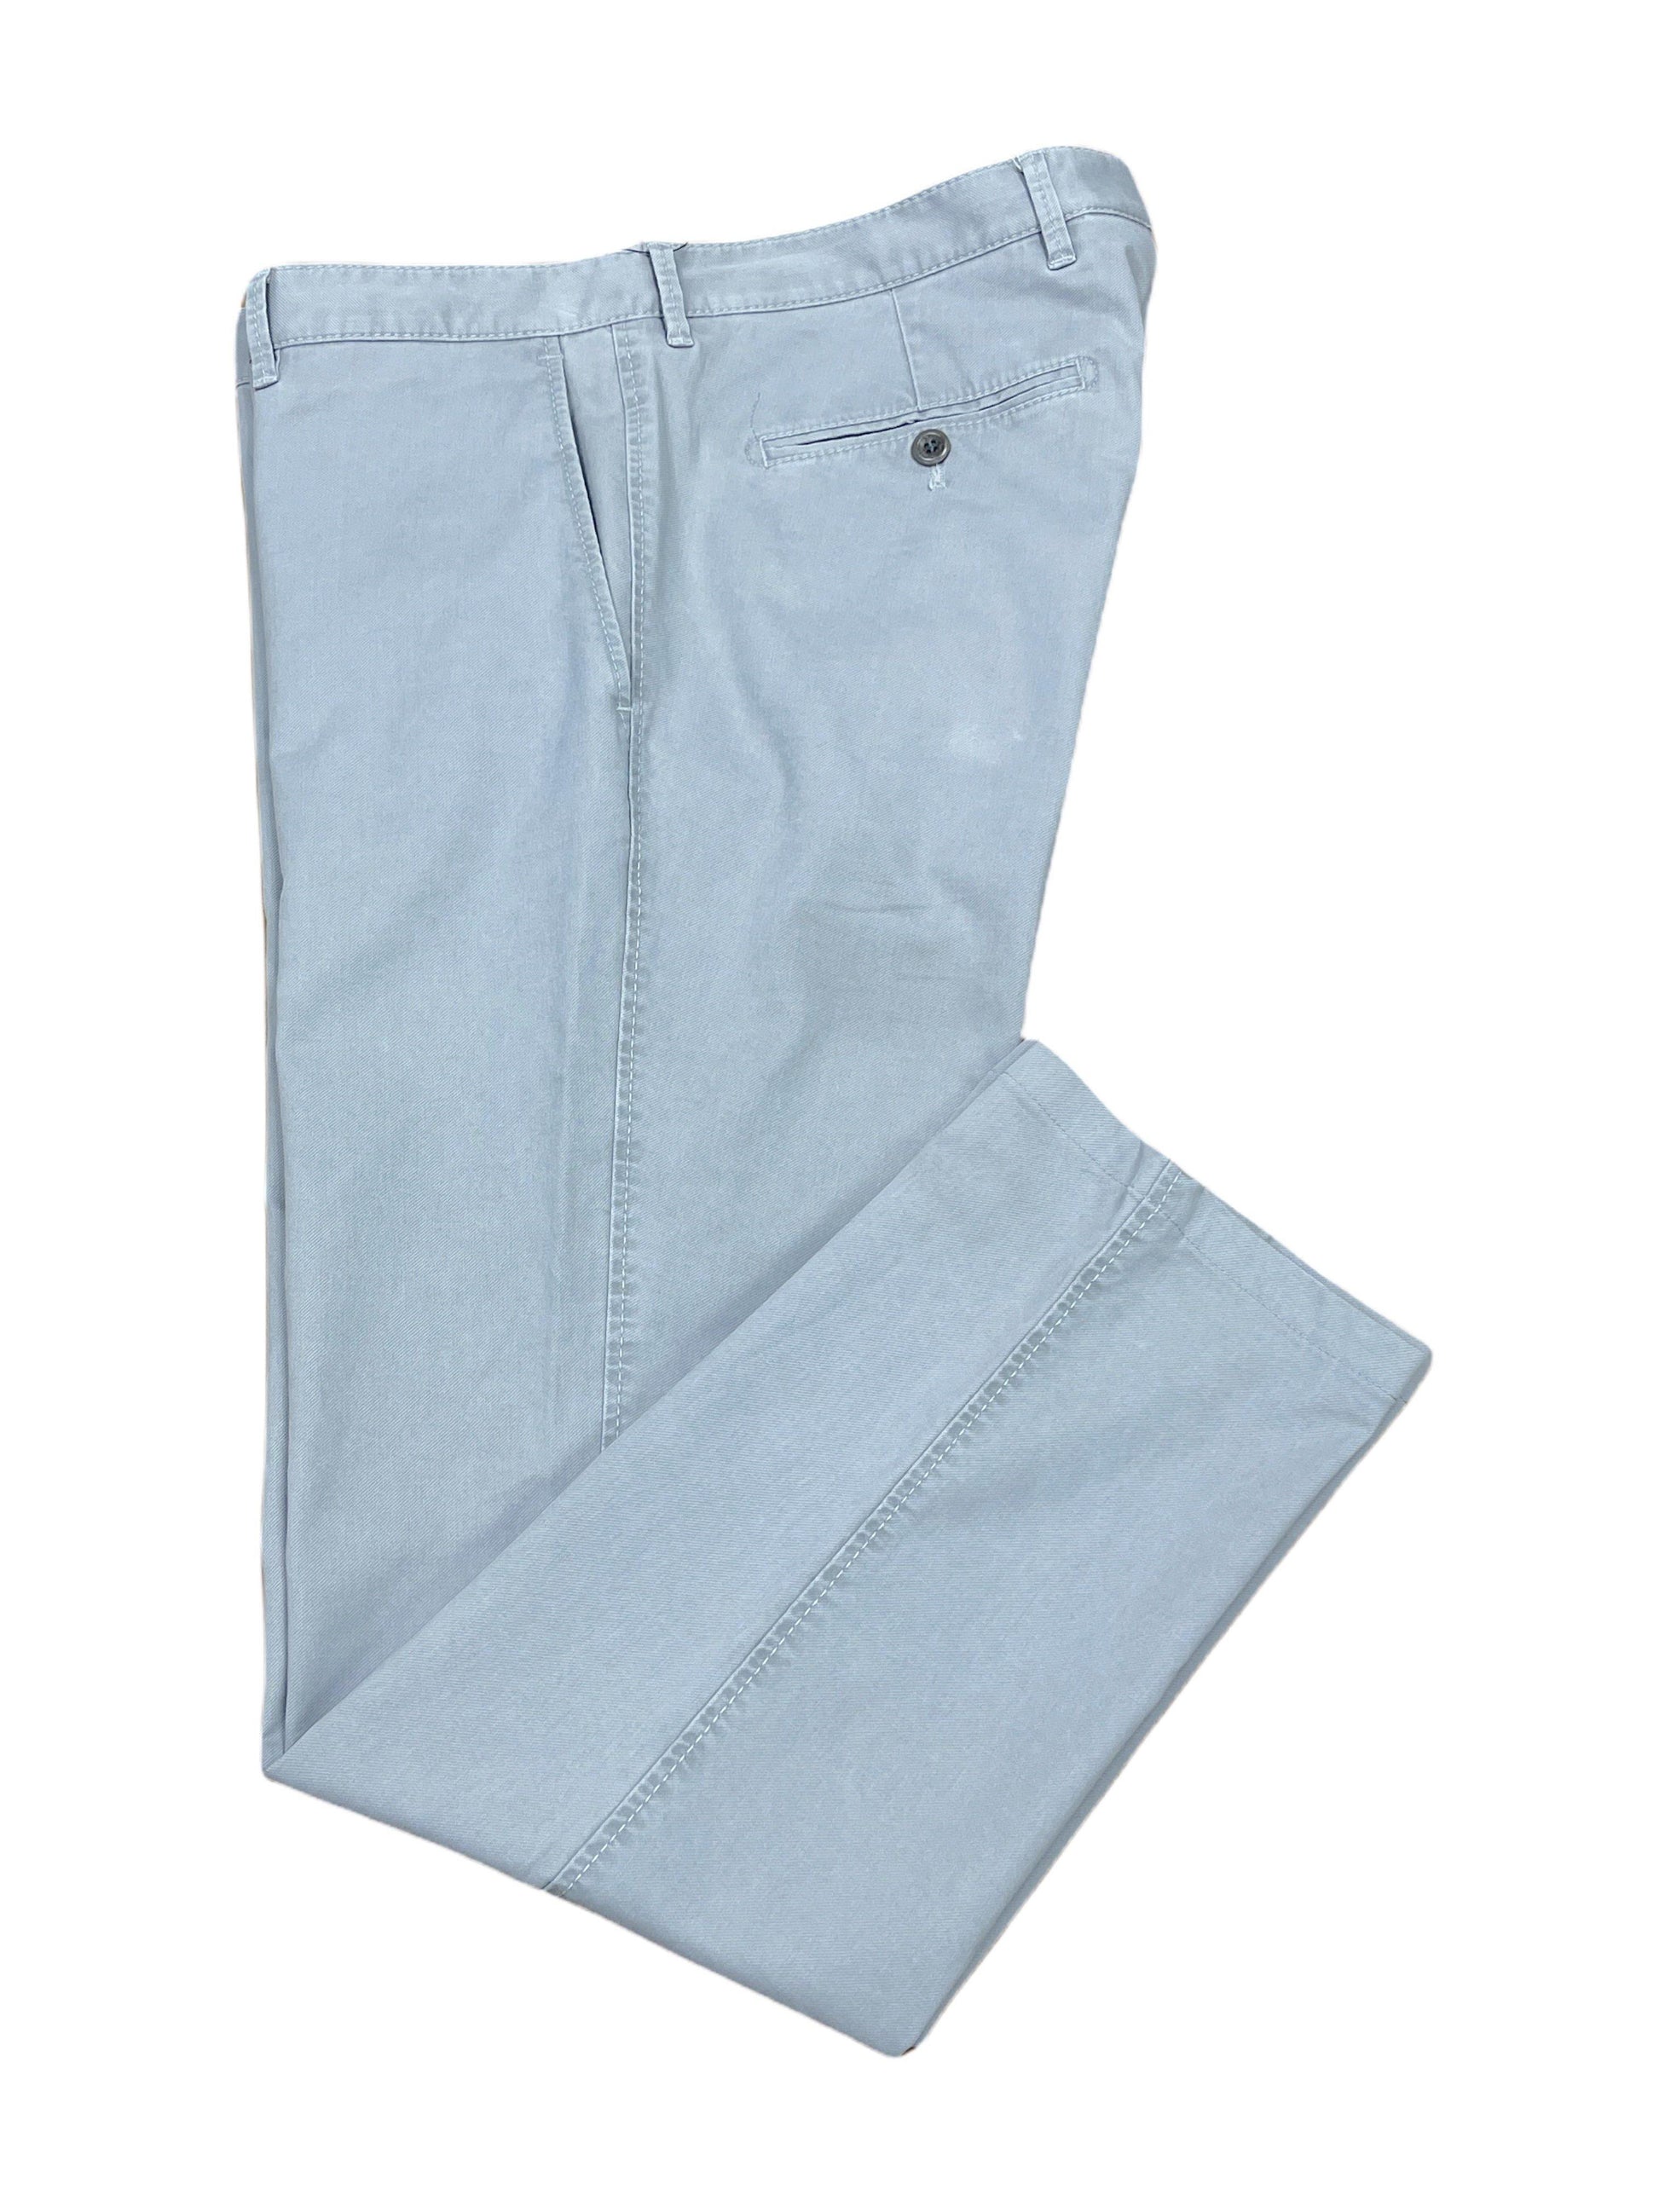 Brax Light Gray Flat Front Cotton Pant - Genuine design